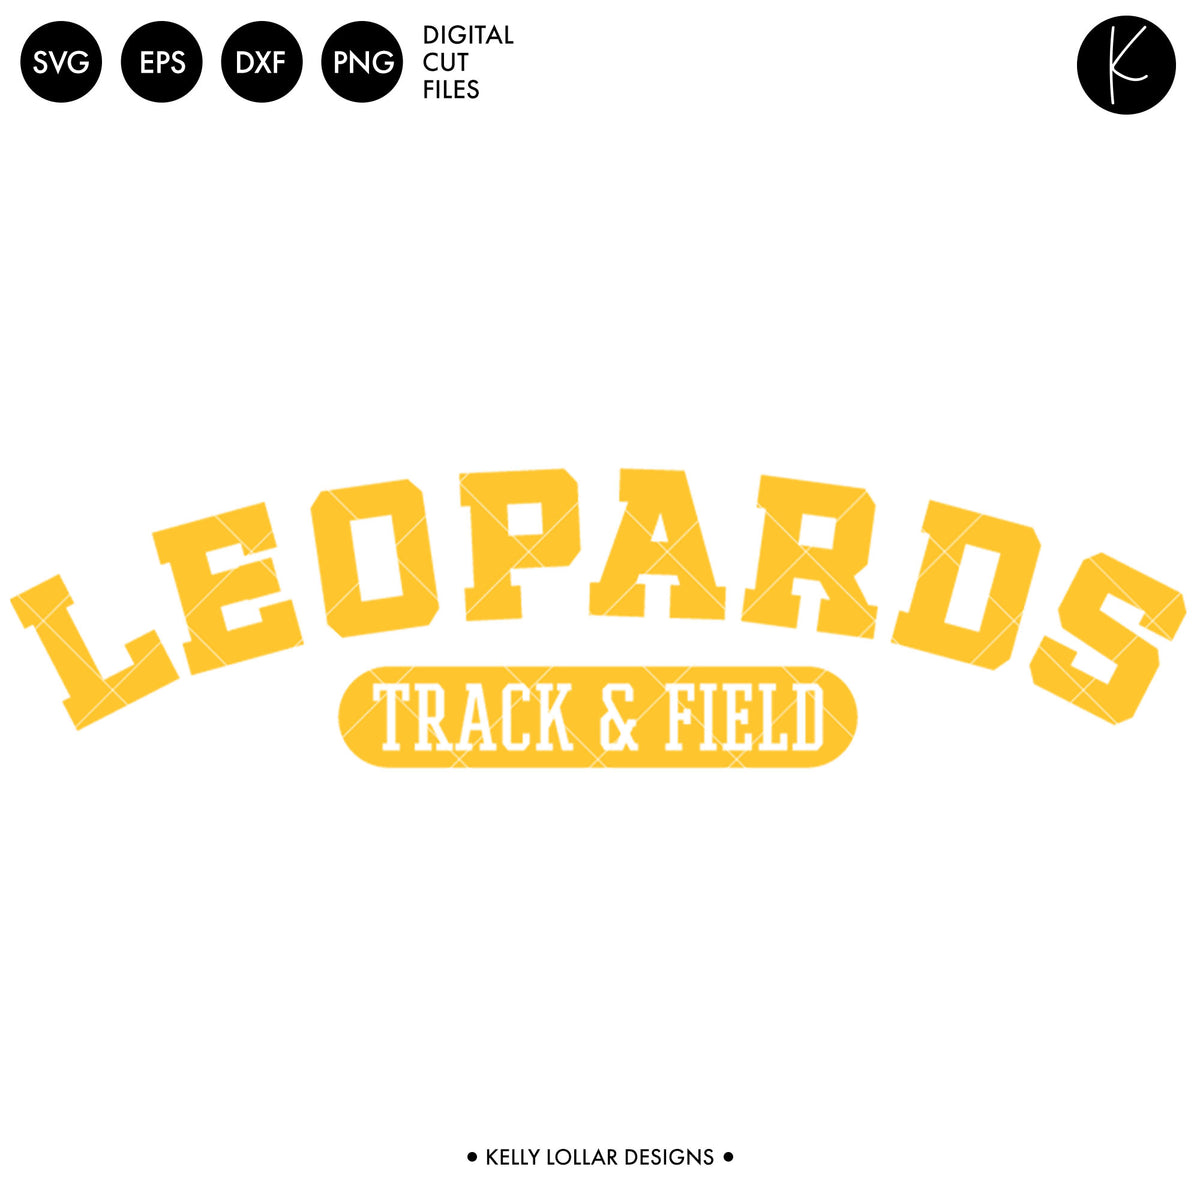 Leopards Track &amp; Field Bundle | SVG DXF EPS PNG Cut Files